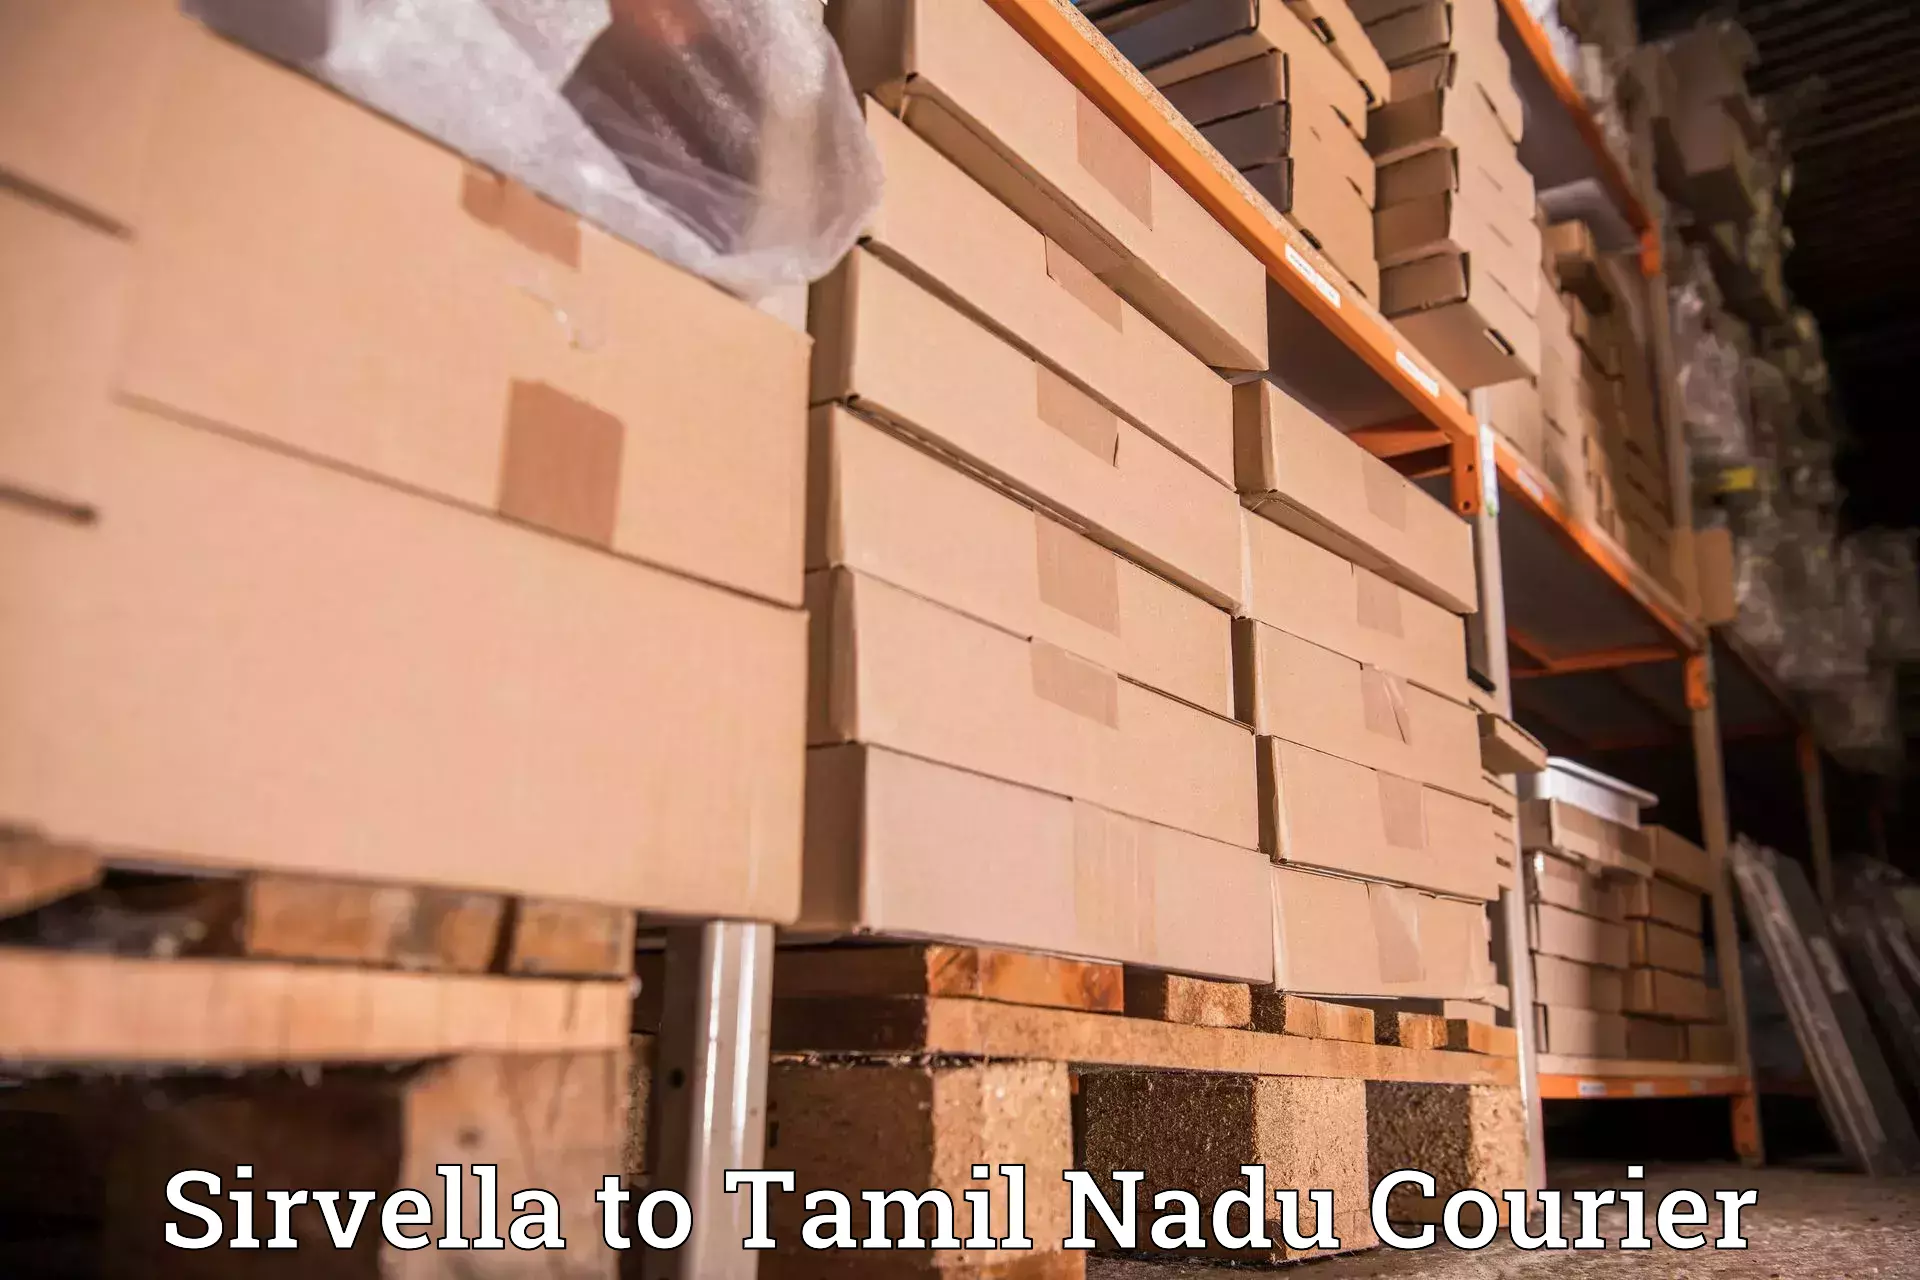 Cargo delivery service Sirvella to Coimbatore